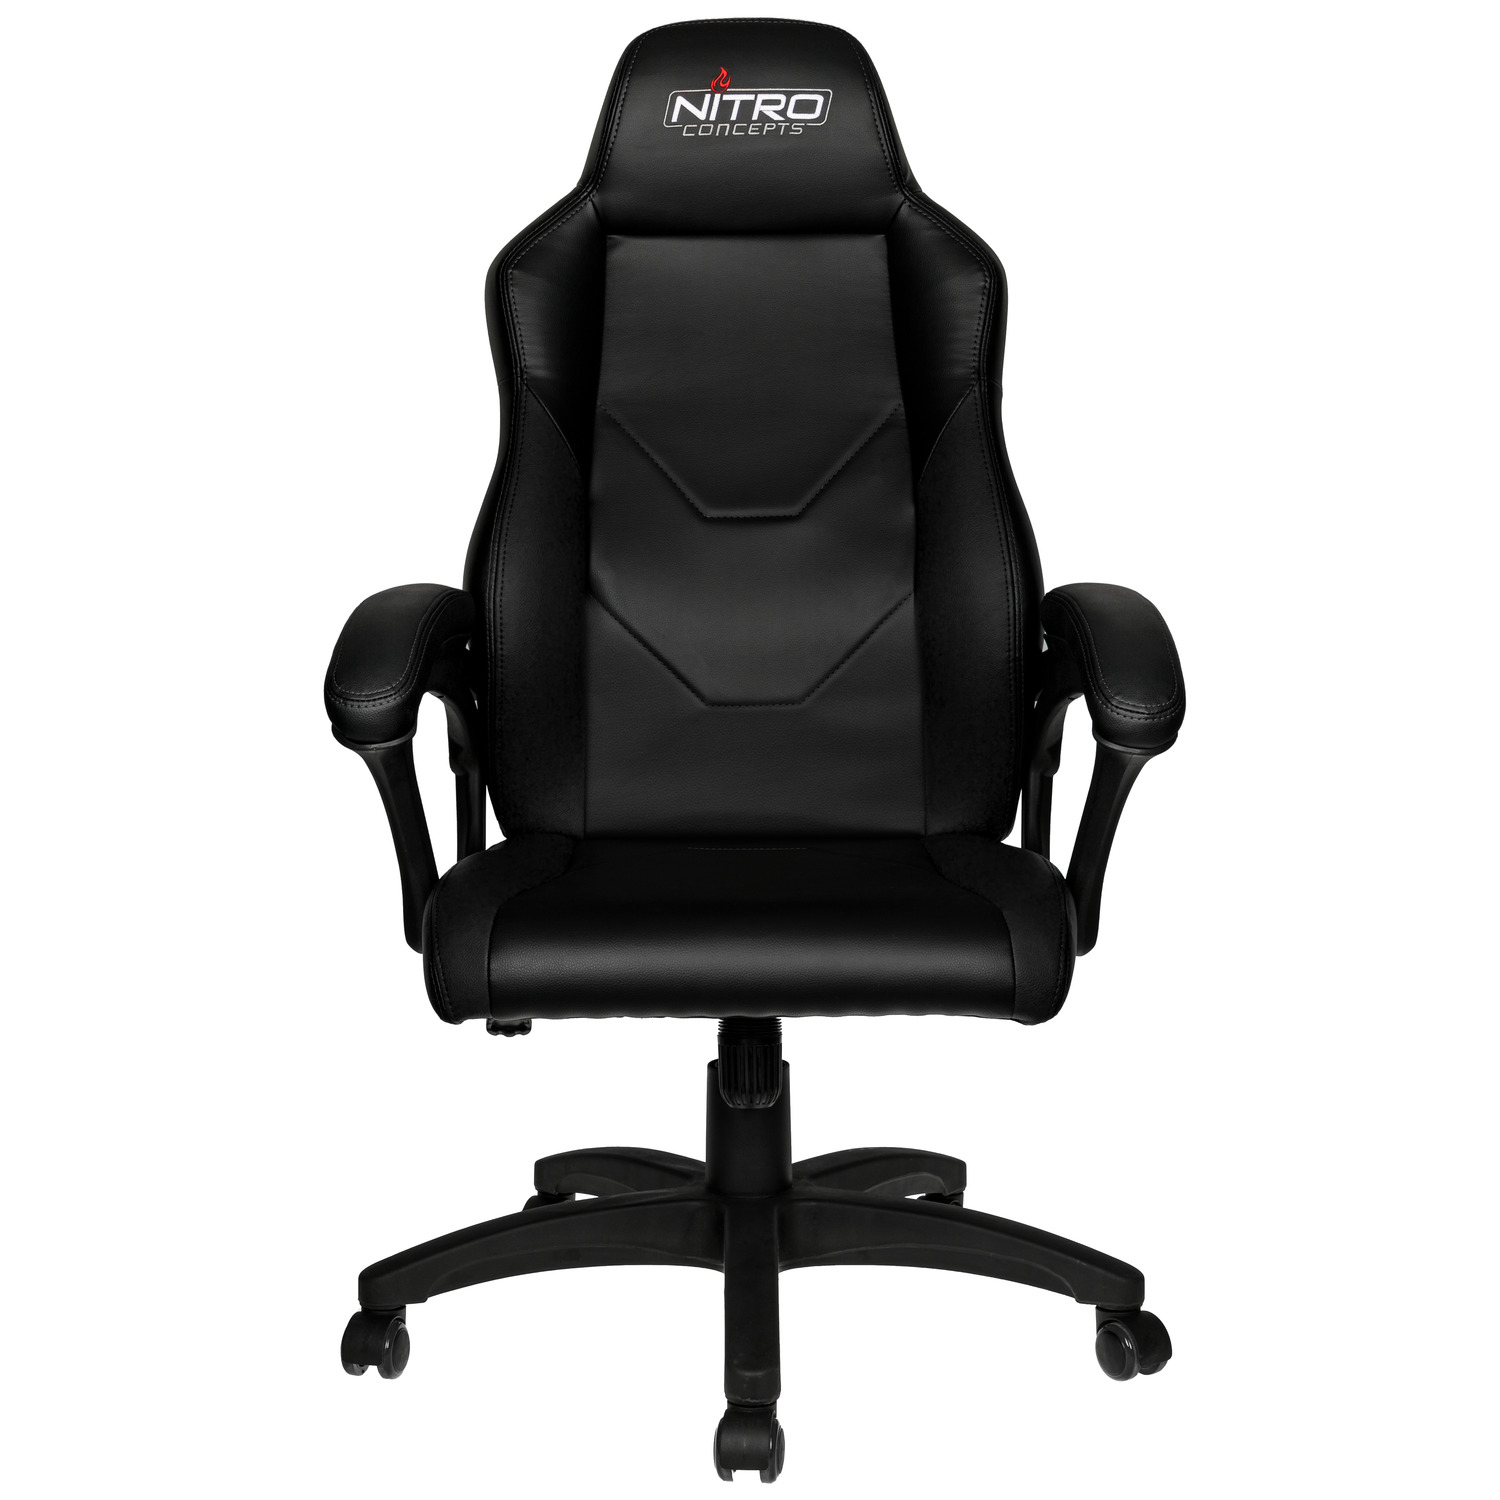 Nitro Concepts - C100 Gaming Chair - Black